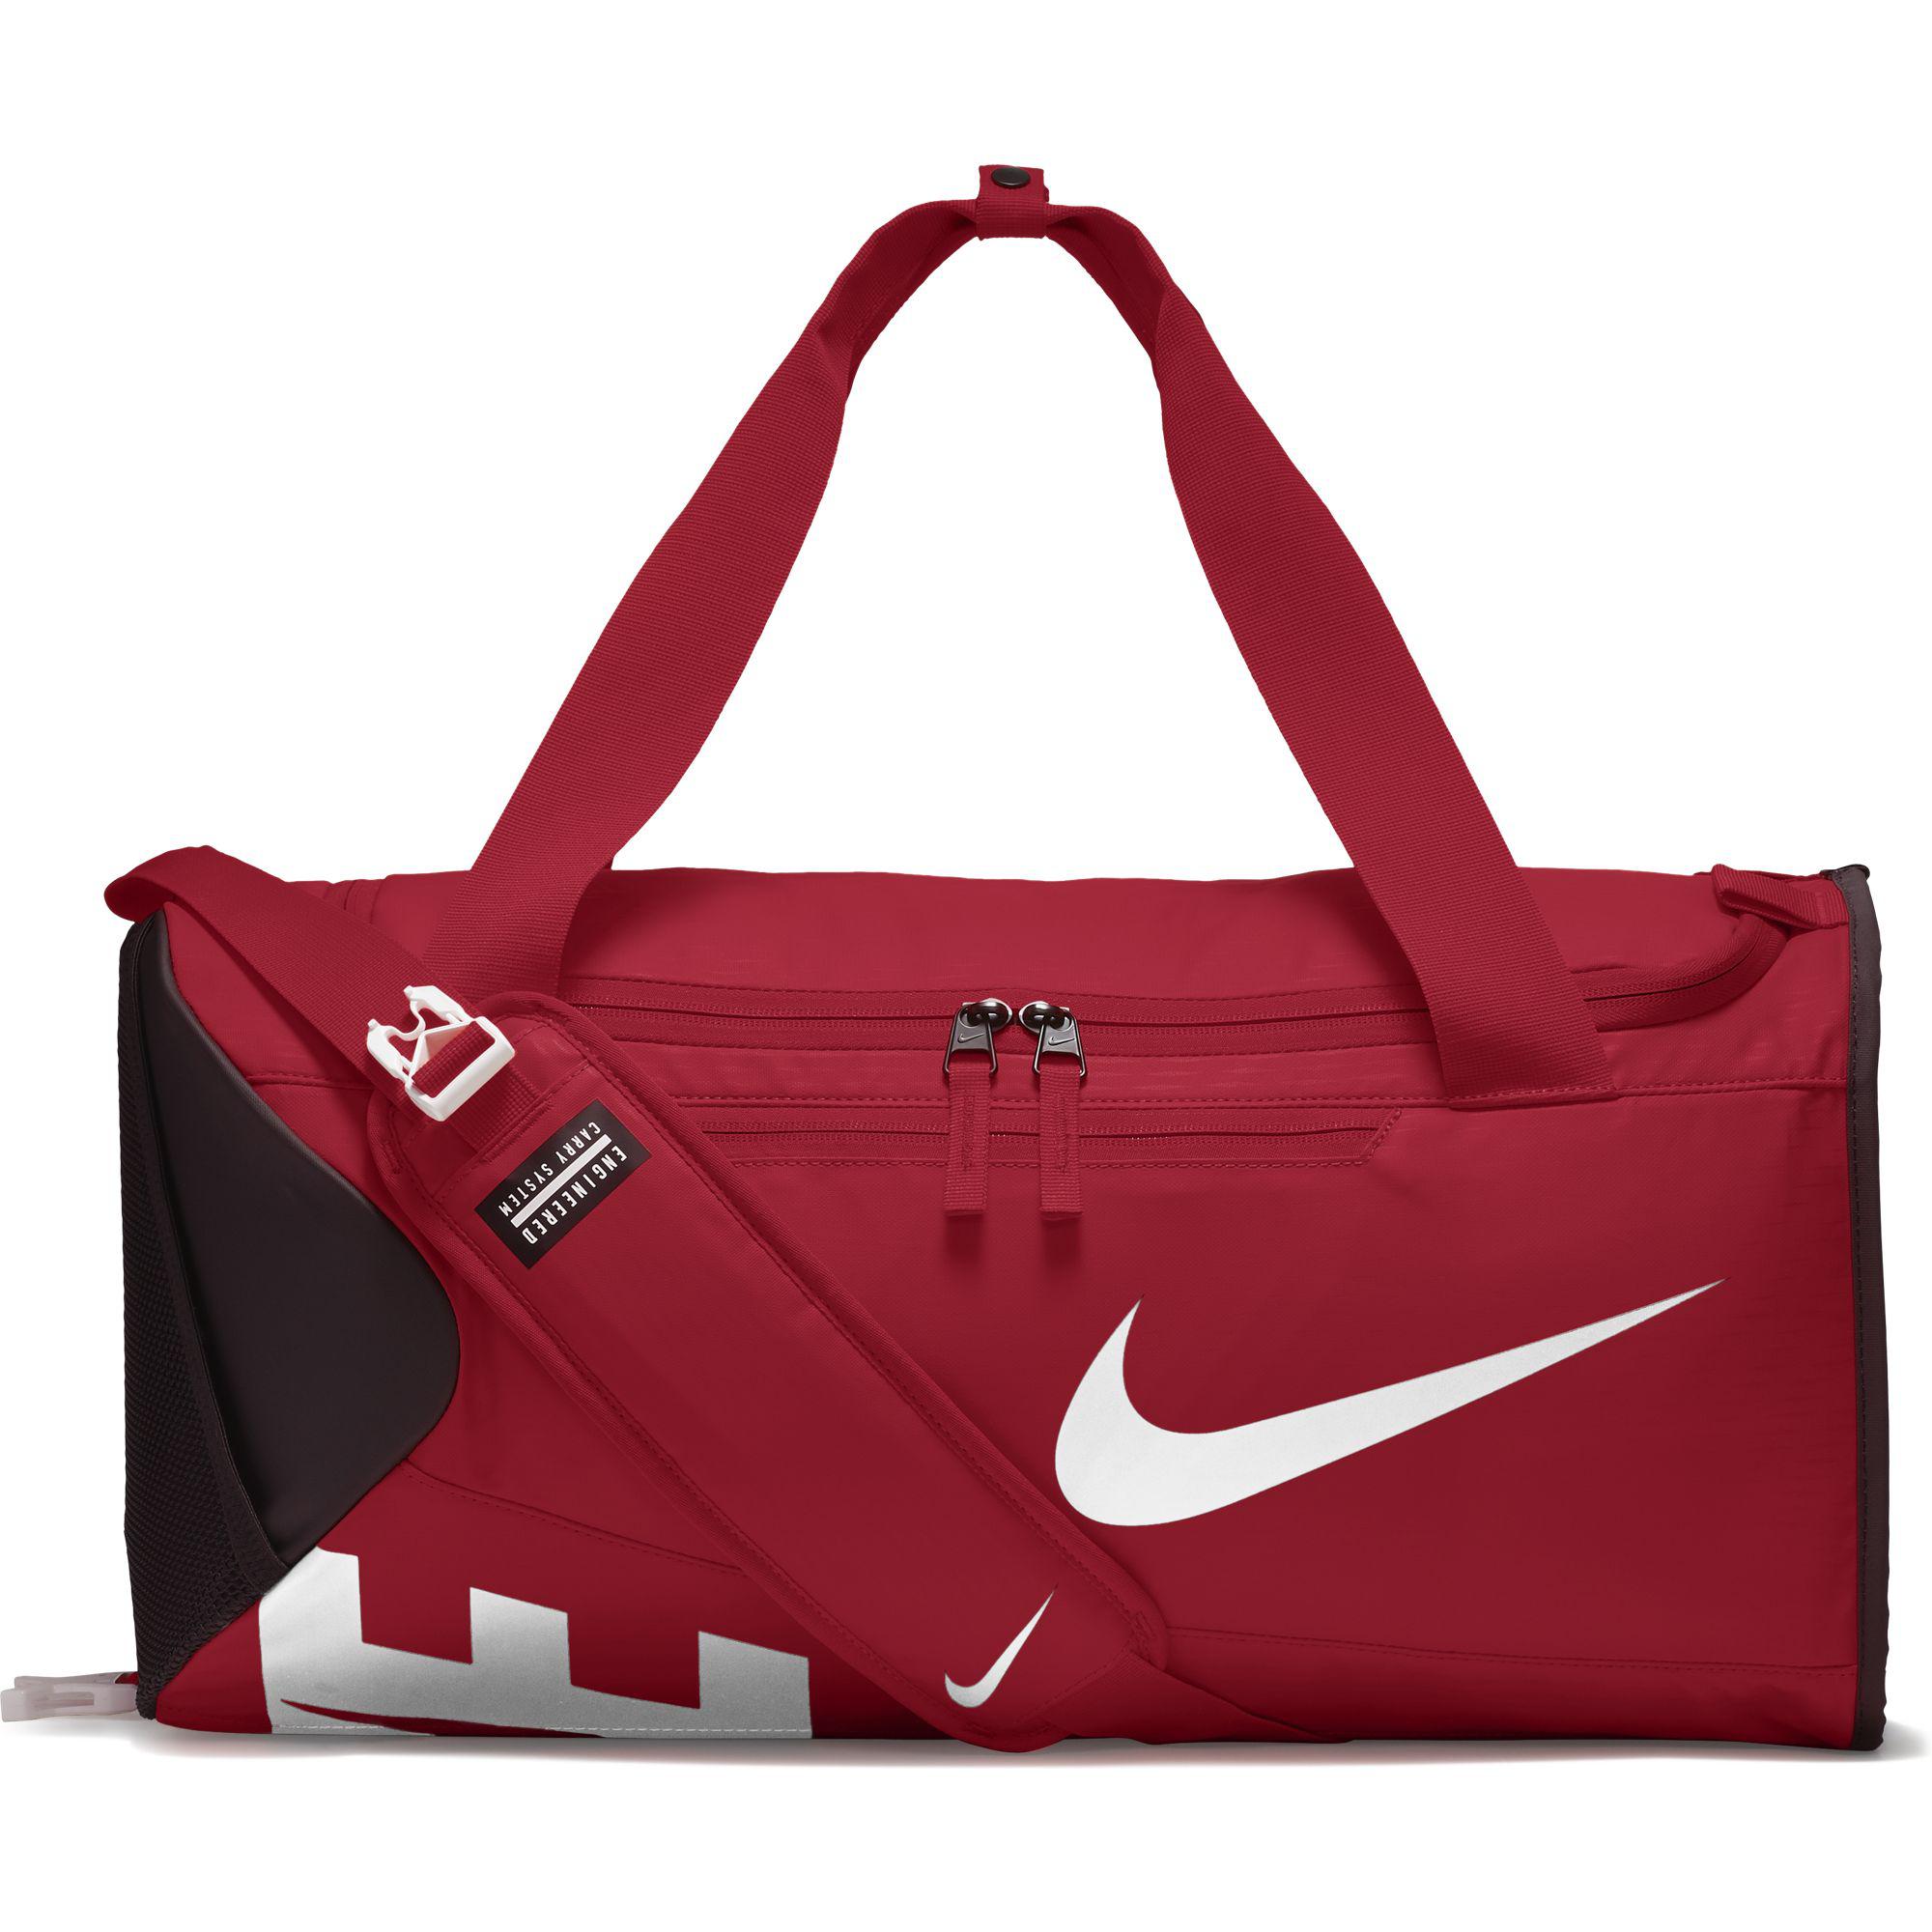 Nike Mens Alpha Adapt Training Bag - Gym Red/Black/White - Tennisnuts.com